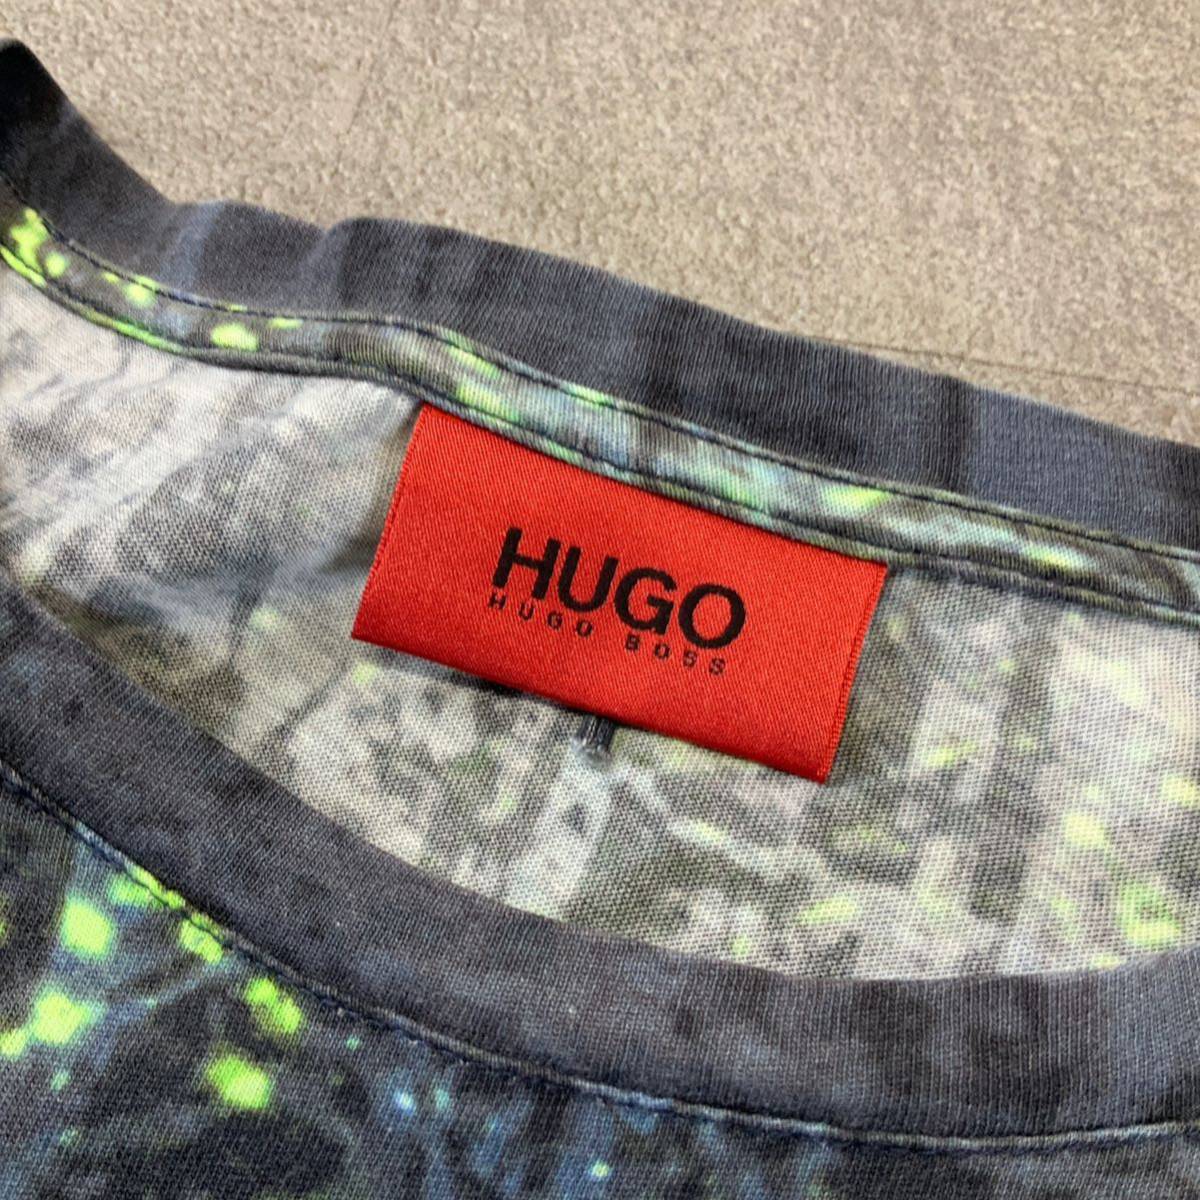  superior article HUGO BOSS Hugo Boss total pattern design short sleeves T-shirt complete sale goods men's S size gray 